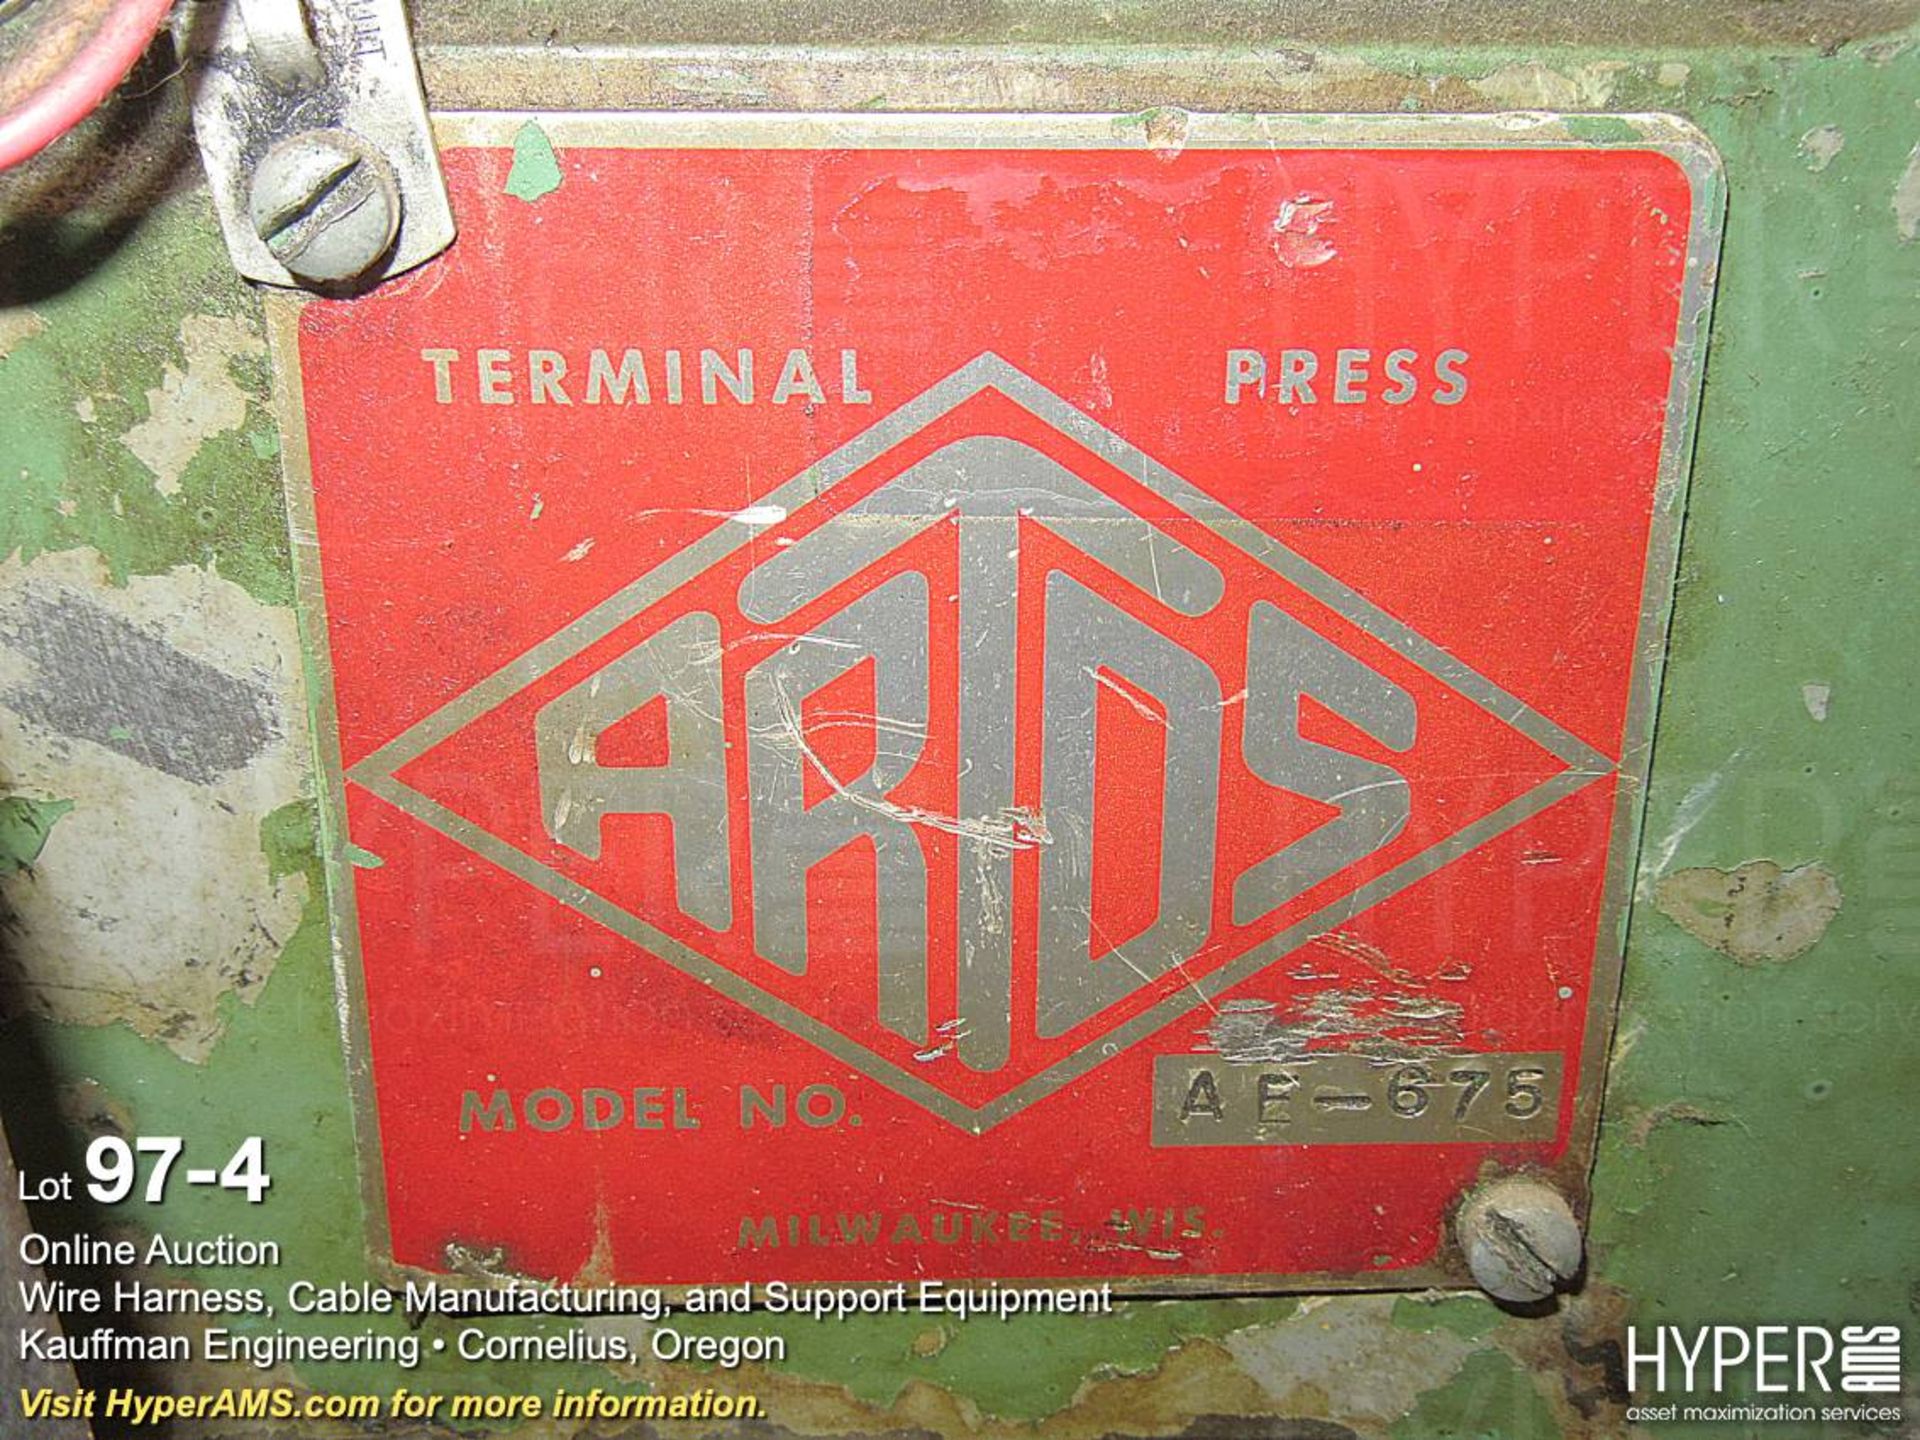 Artos model AE-675 benchtop terminating crimping press - Image 4 of 4